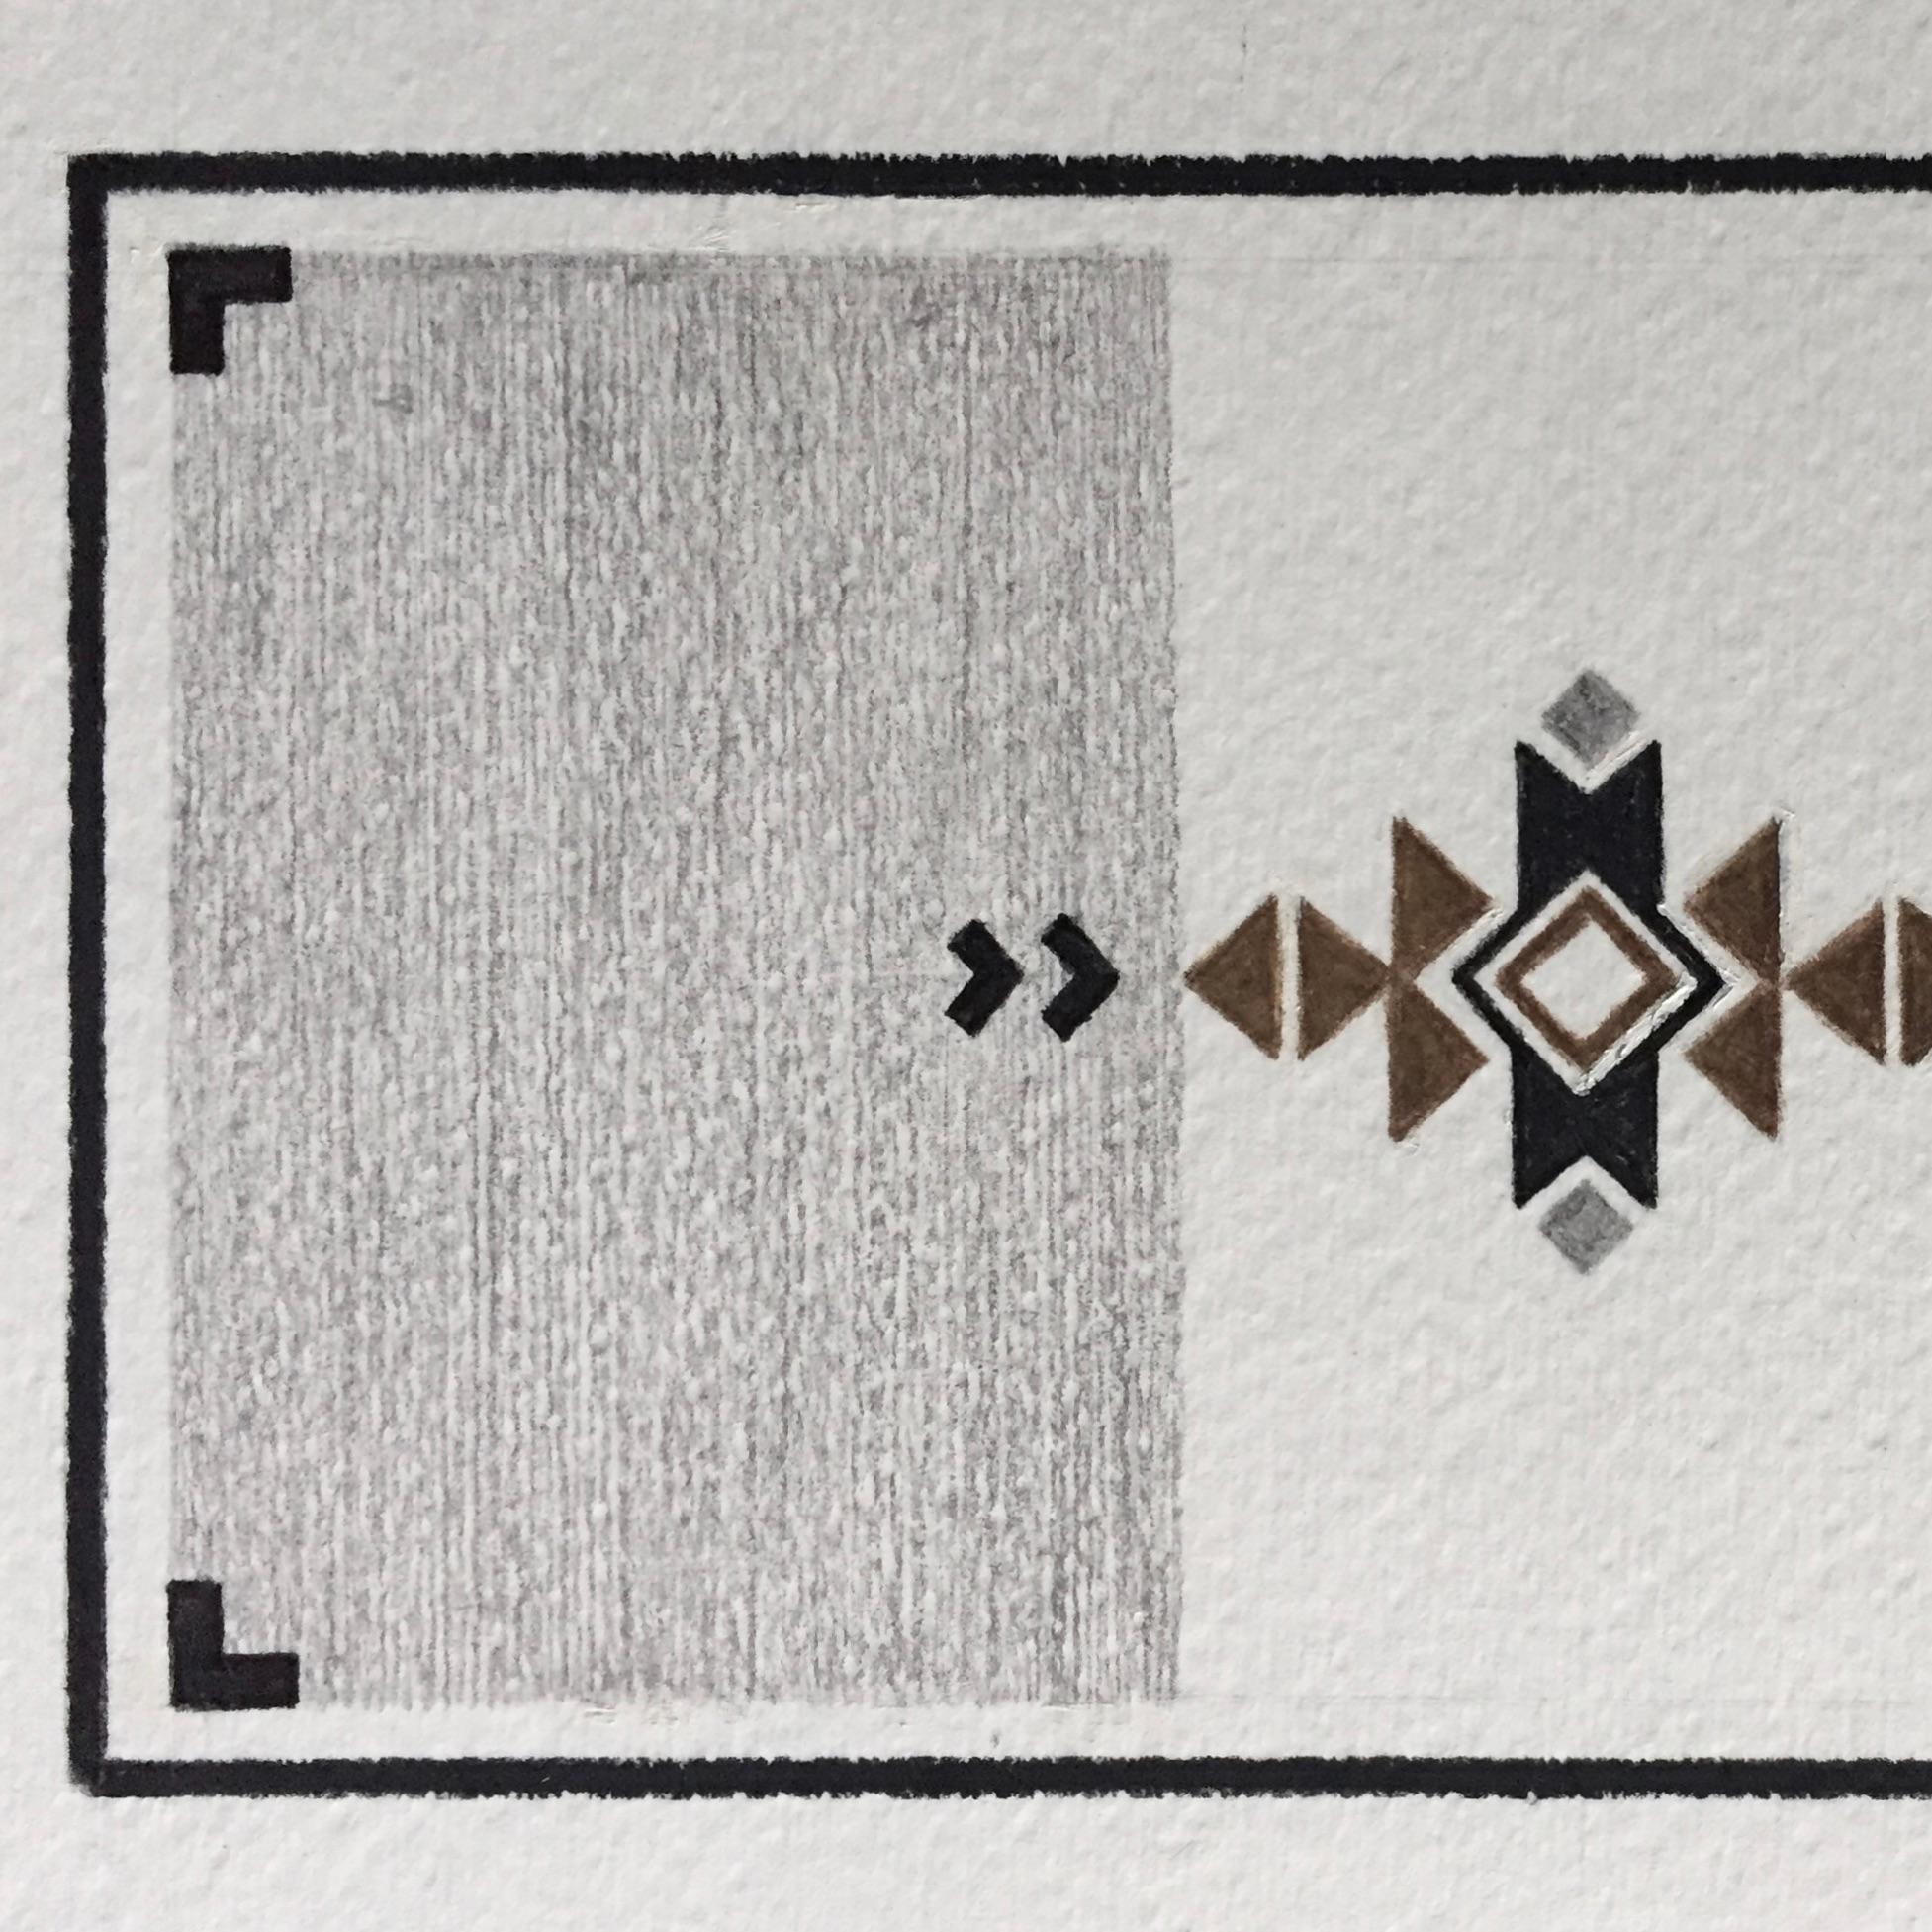 Magic Carpet Ride 4 (Navajo Inspired, Geometric Design, Black and White Artwork) For Sale 1